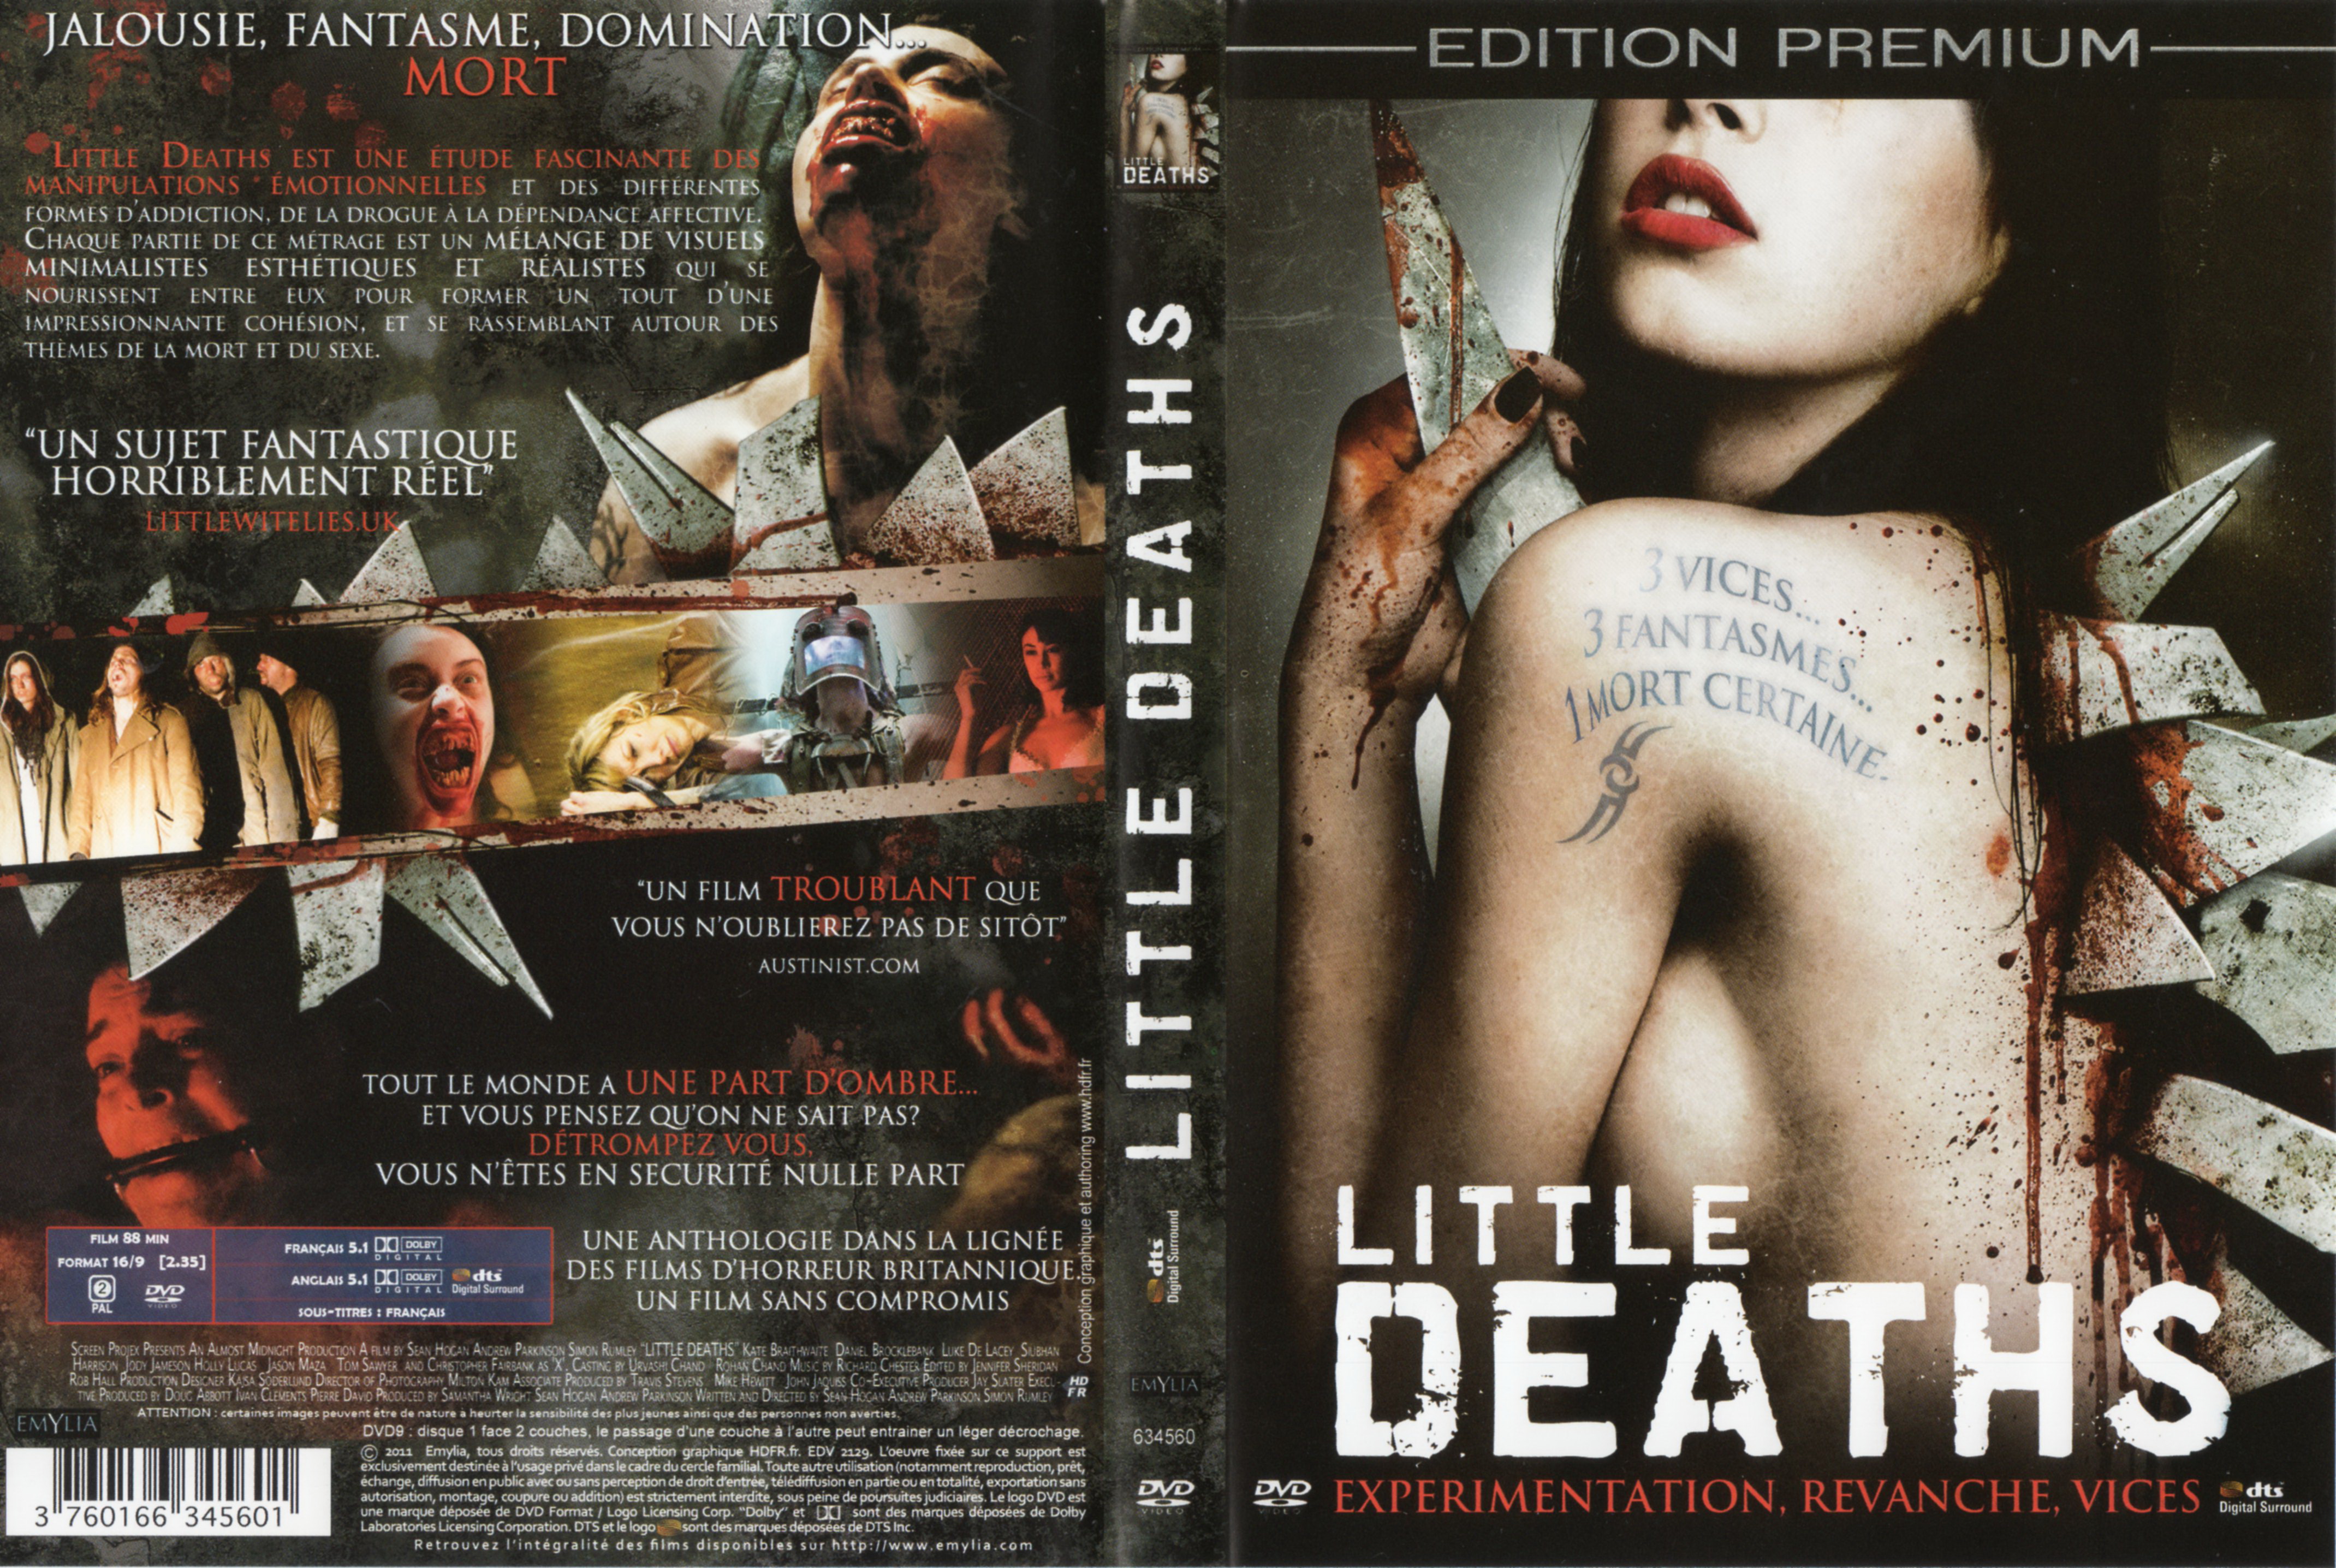 Jaquette DVD Little deaths